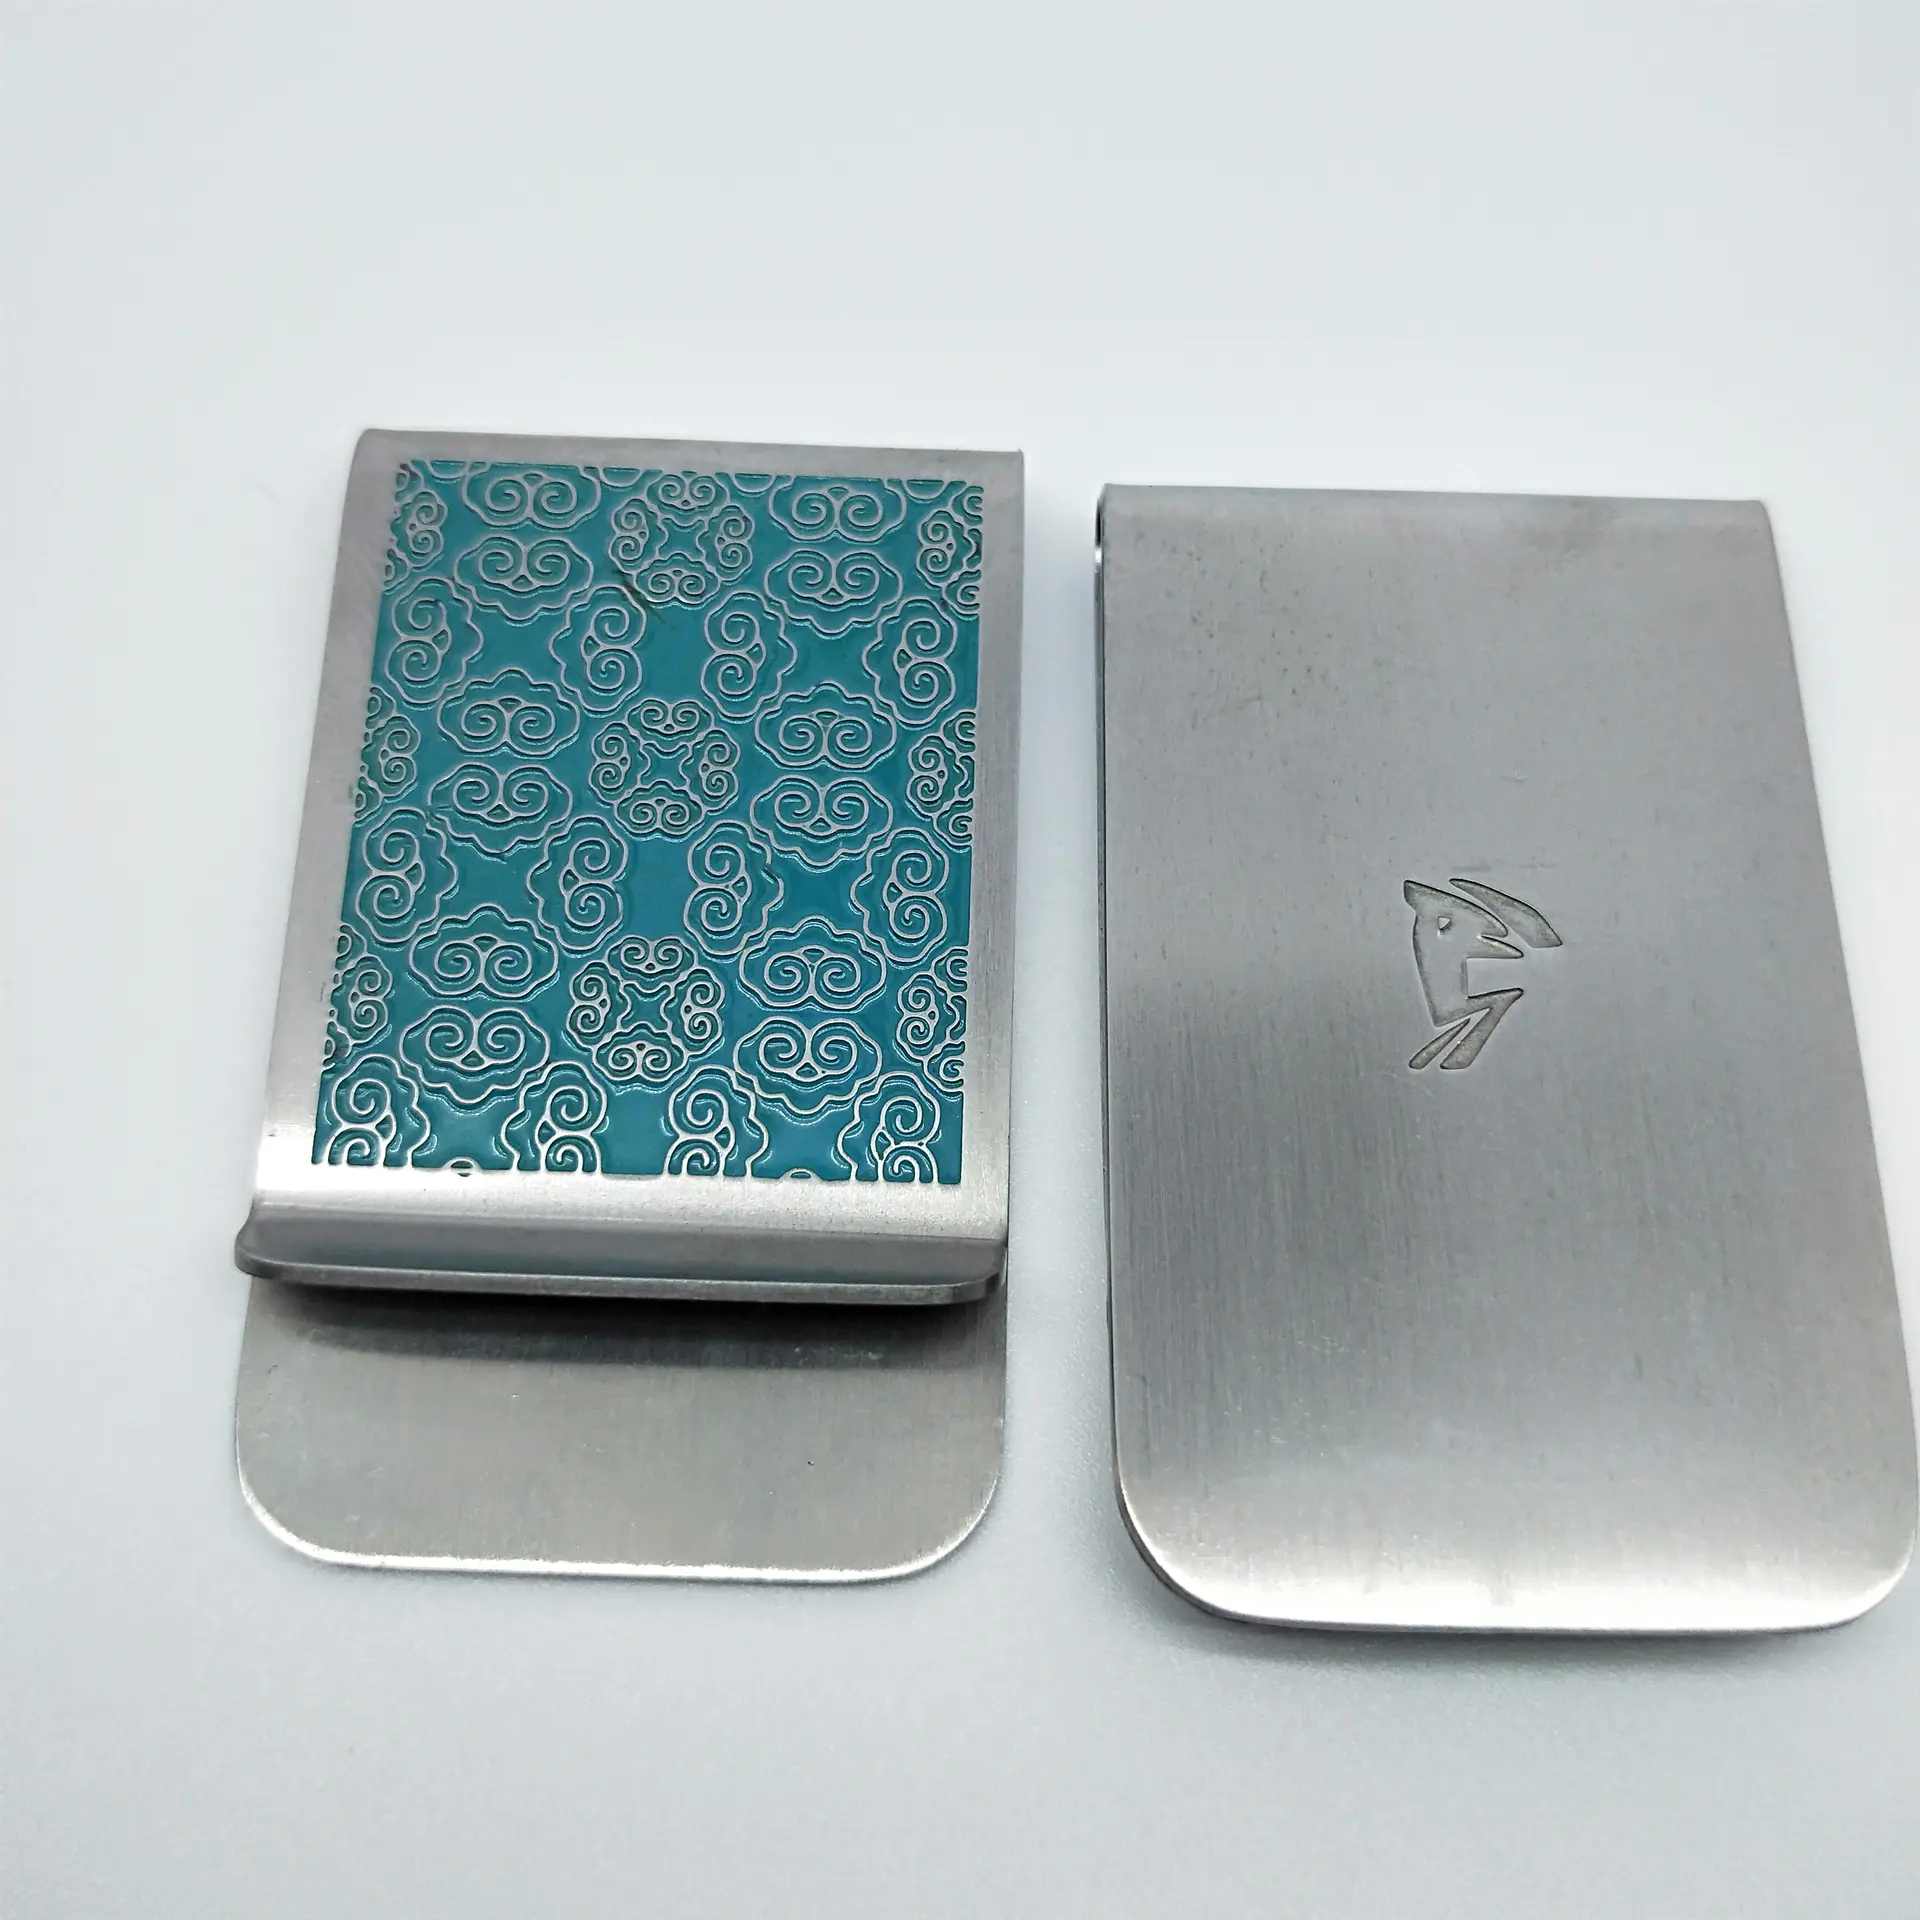 Antique silver unique personalized money clip with soft enamel filled